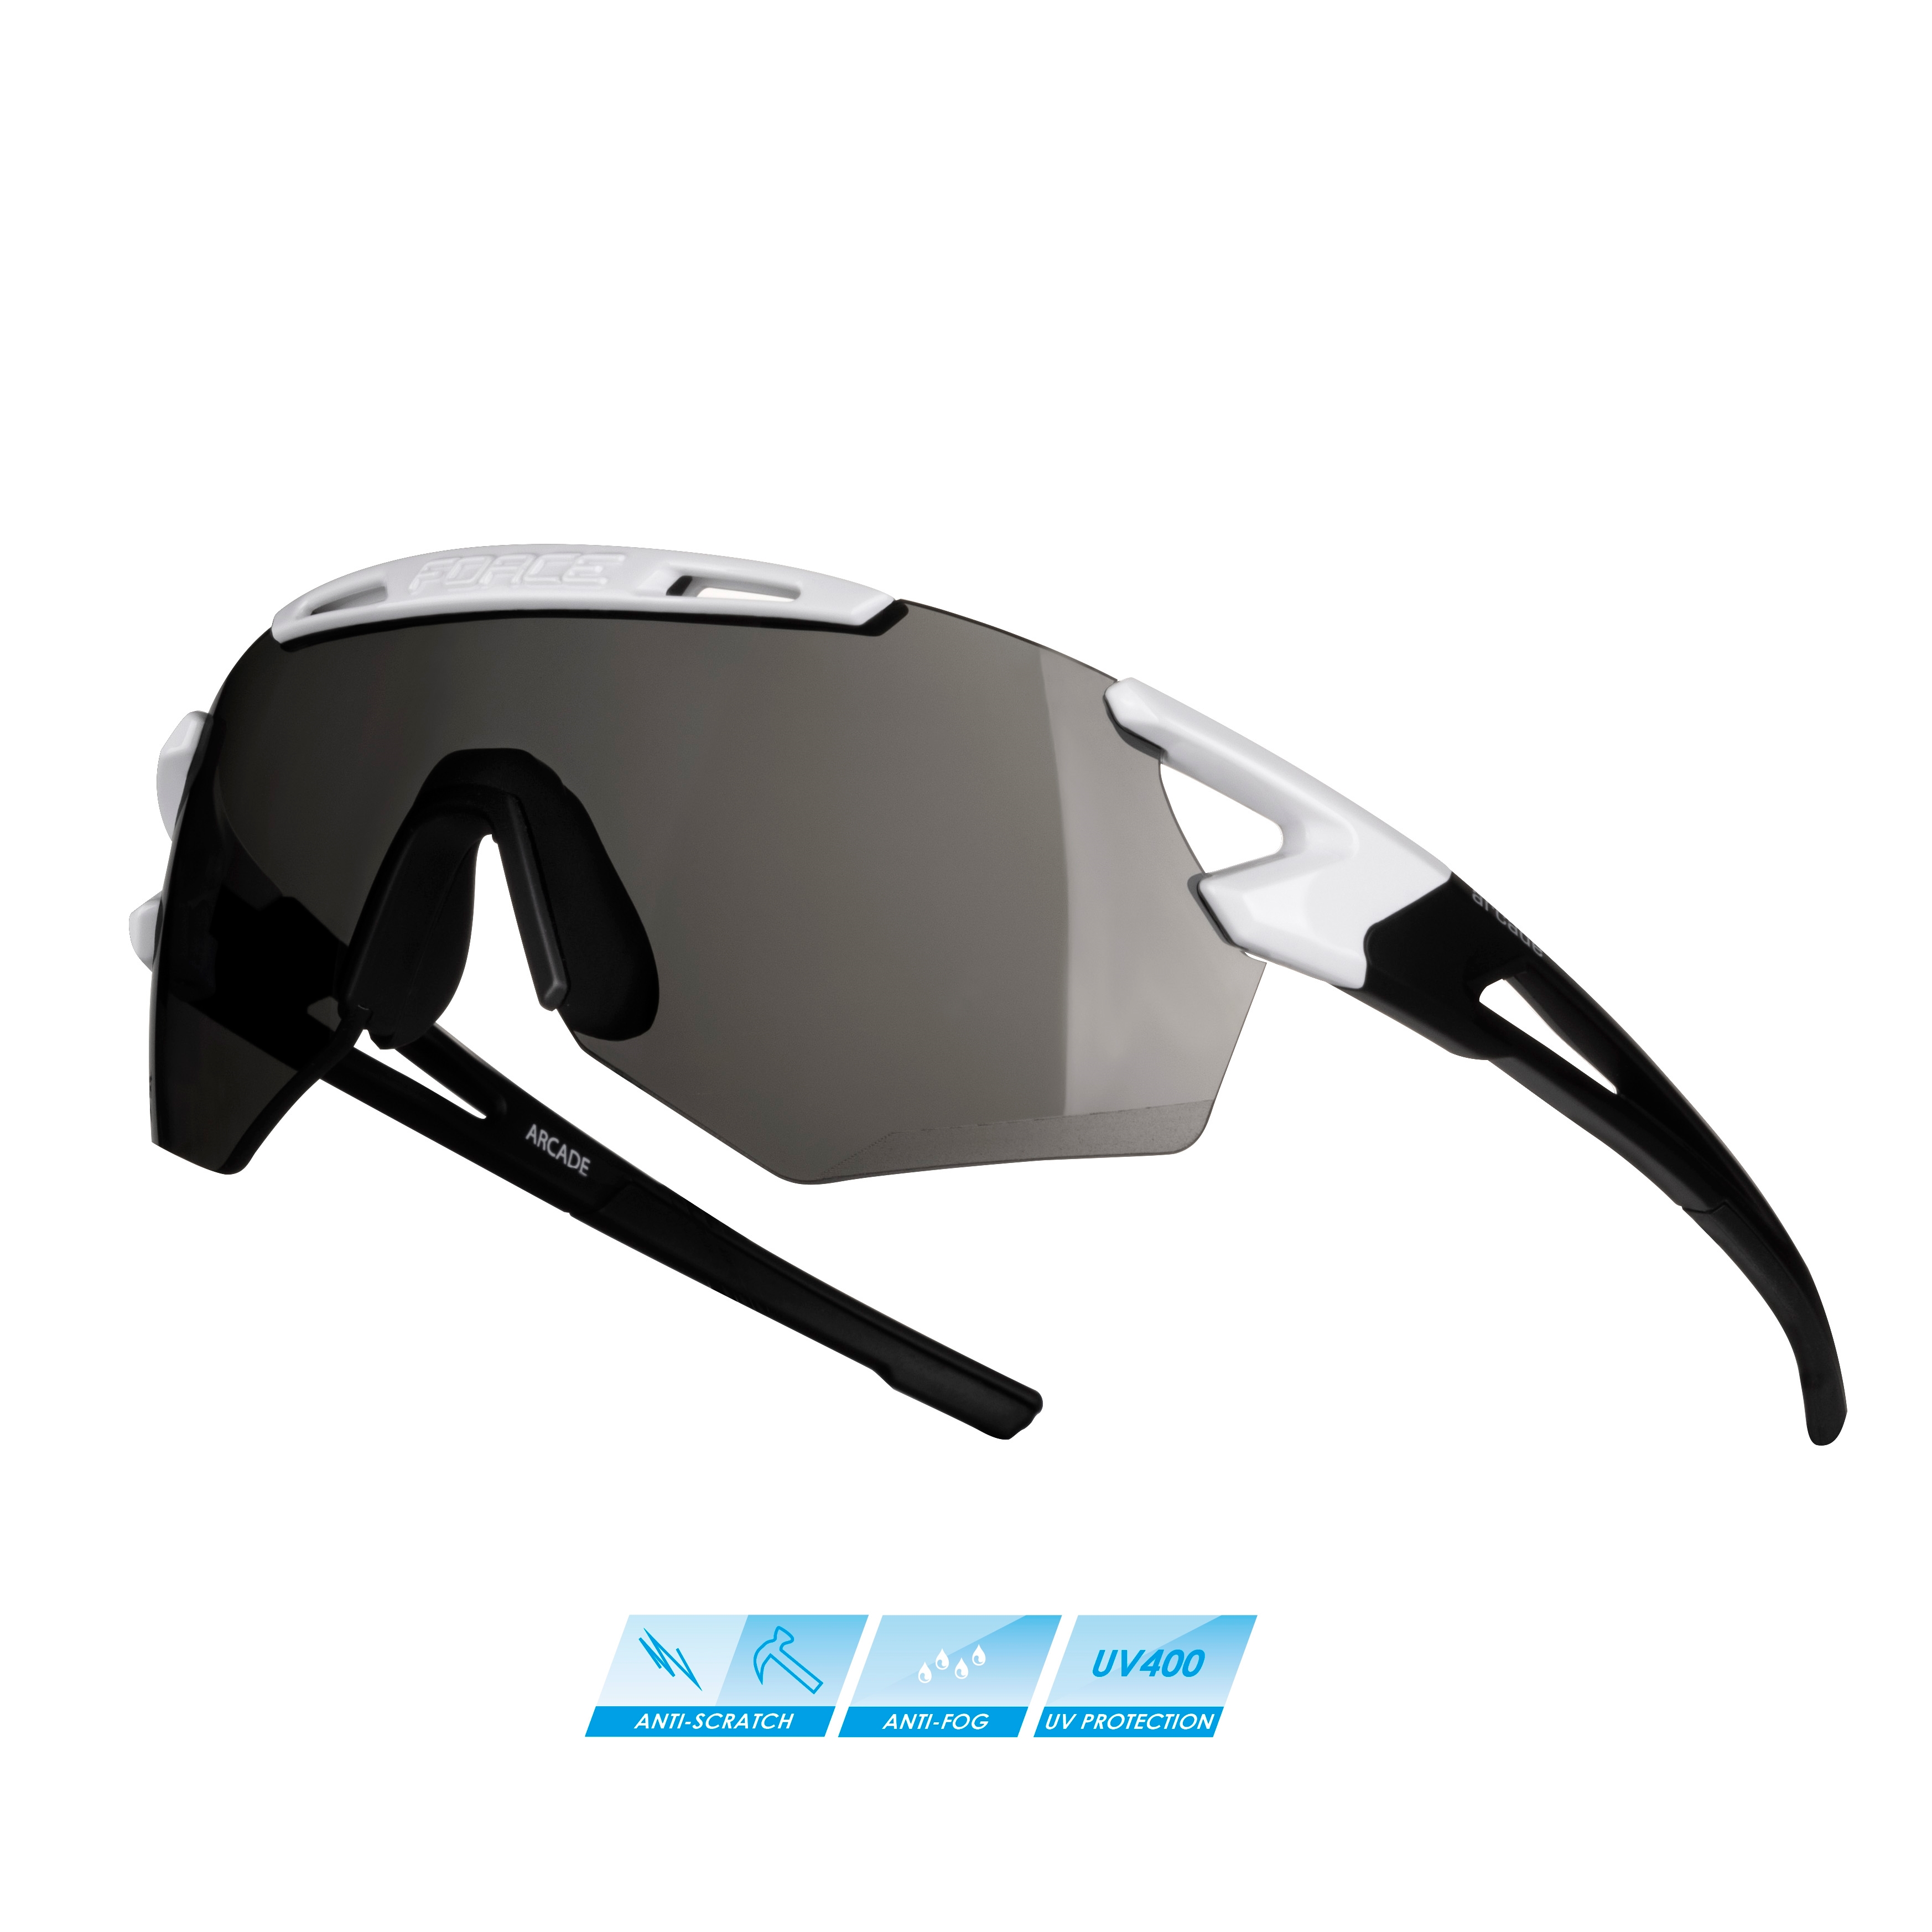 FORCE brýle F ARCADE,bílo-černé, černá polarizační skla varianta: barva: černá, skla: polarizační, určení: cyklistické, Řada: Black line